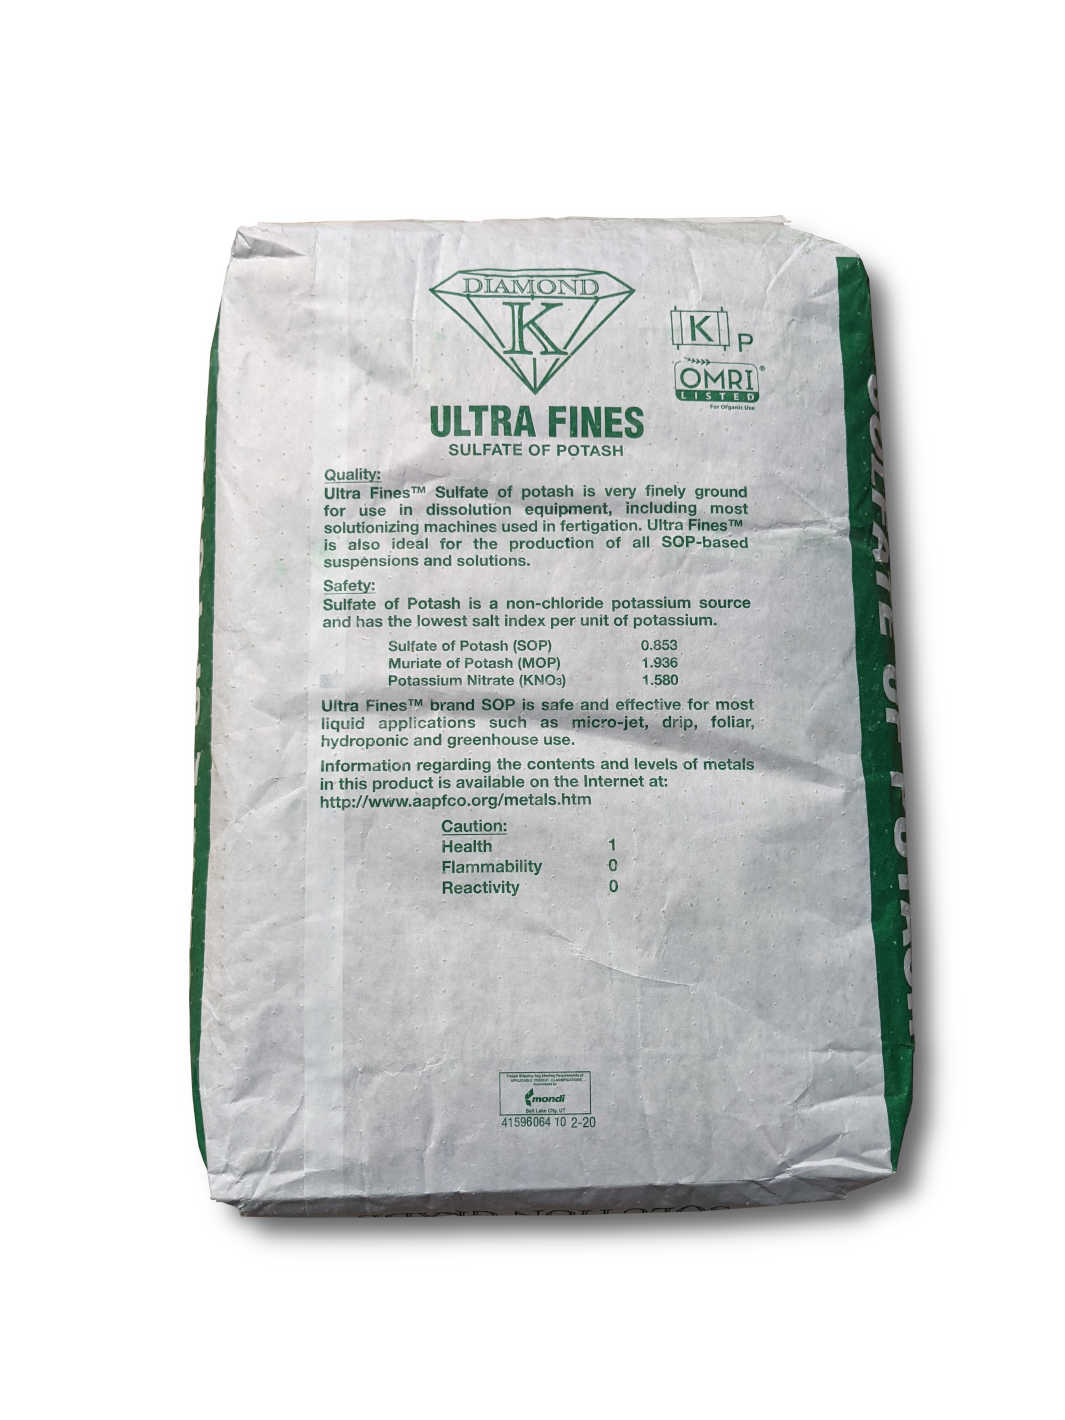 Back of 50lb Bag of Sulfate of Potash Diamond K Ultra Fines Potassium Sulfate